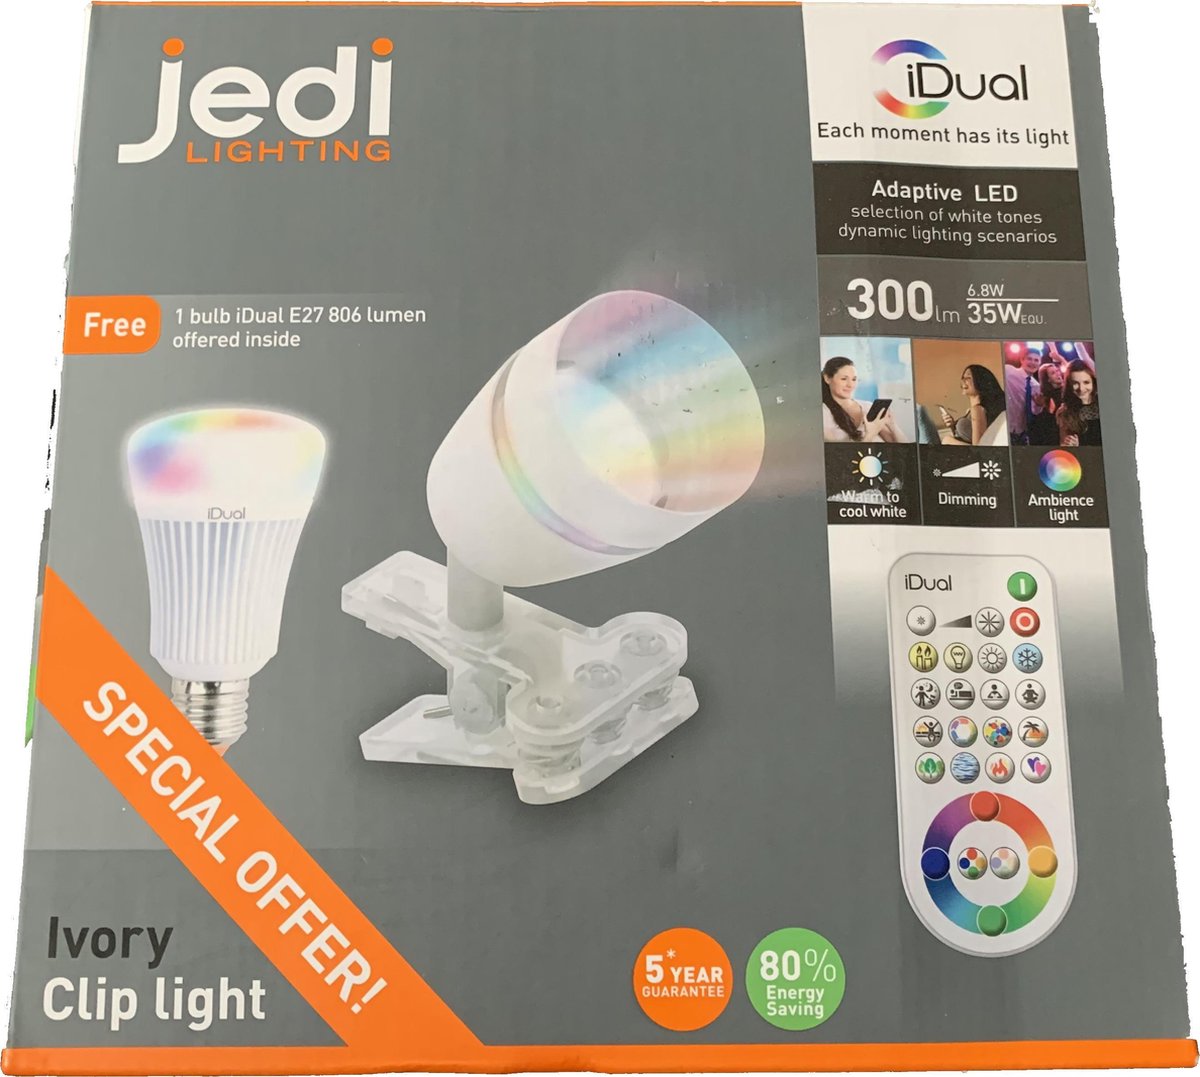 Jedi Ivory Clip Light iDual LED lamp met afstandsbediening en extra lamp |  bol.com